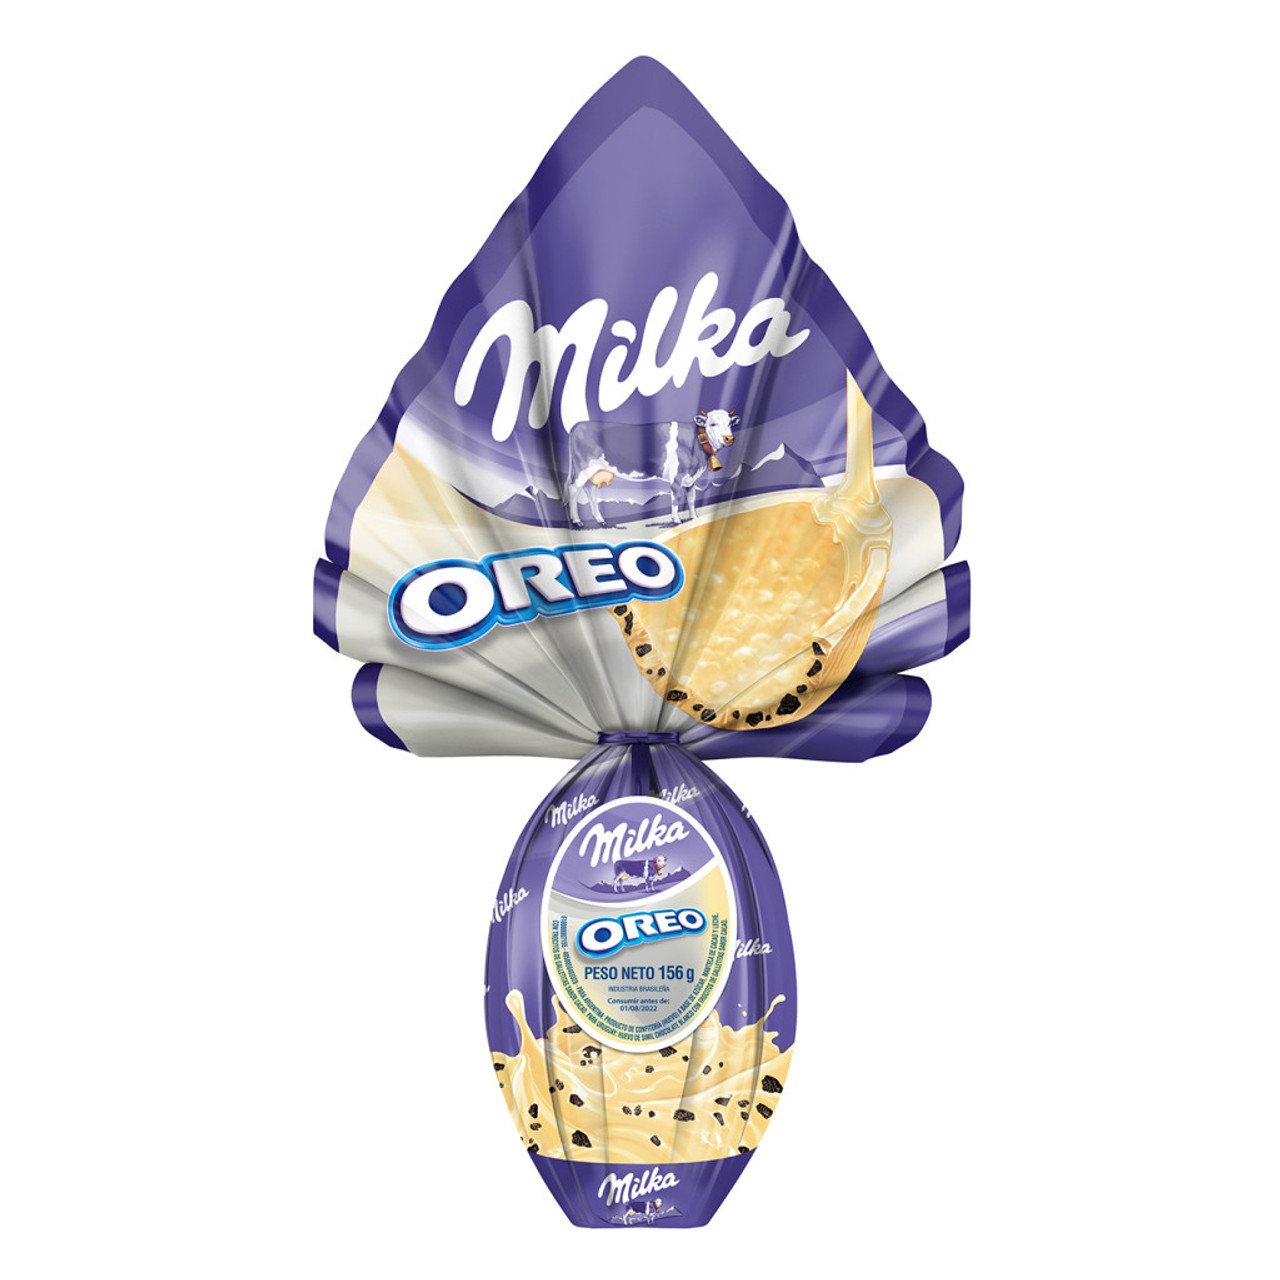 Milka White Chocolate Dipped Oreo Cookies, 119 g / 4.19 oz